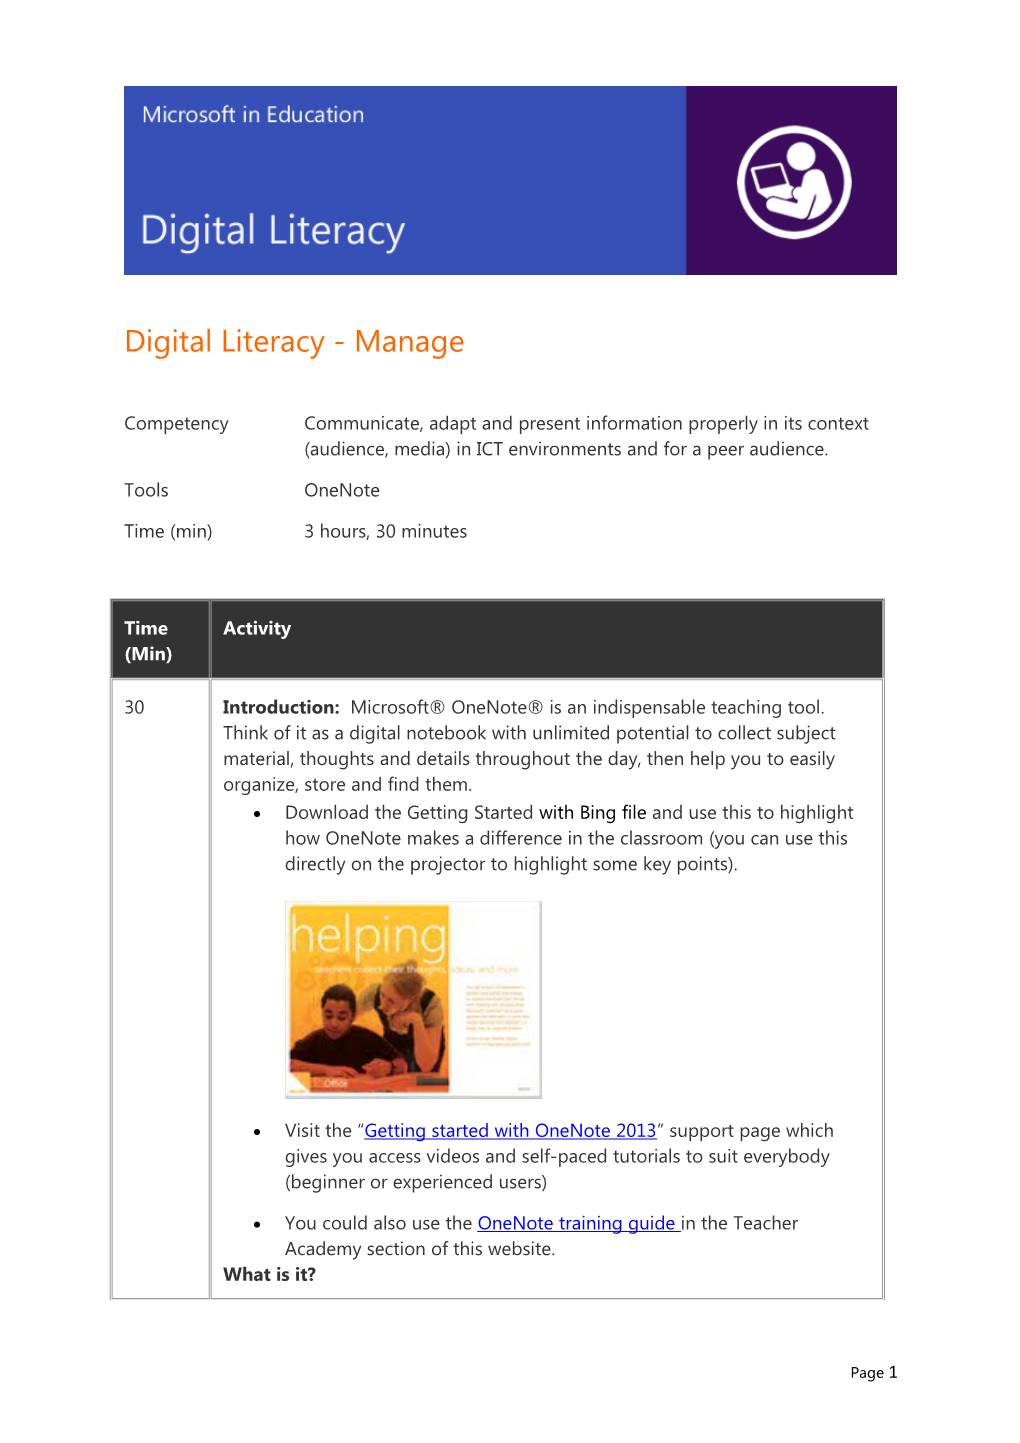 Digital Literacy - Manage